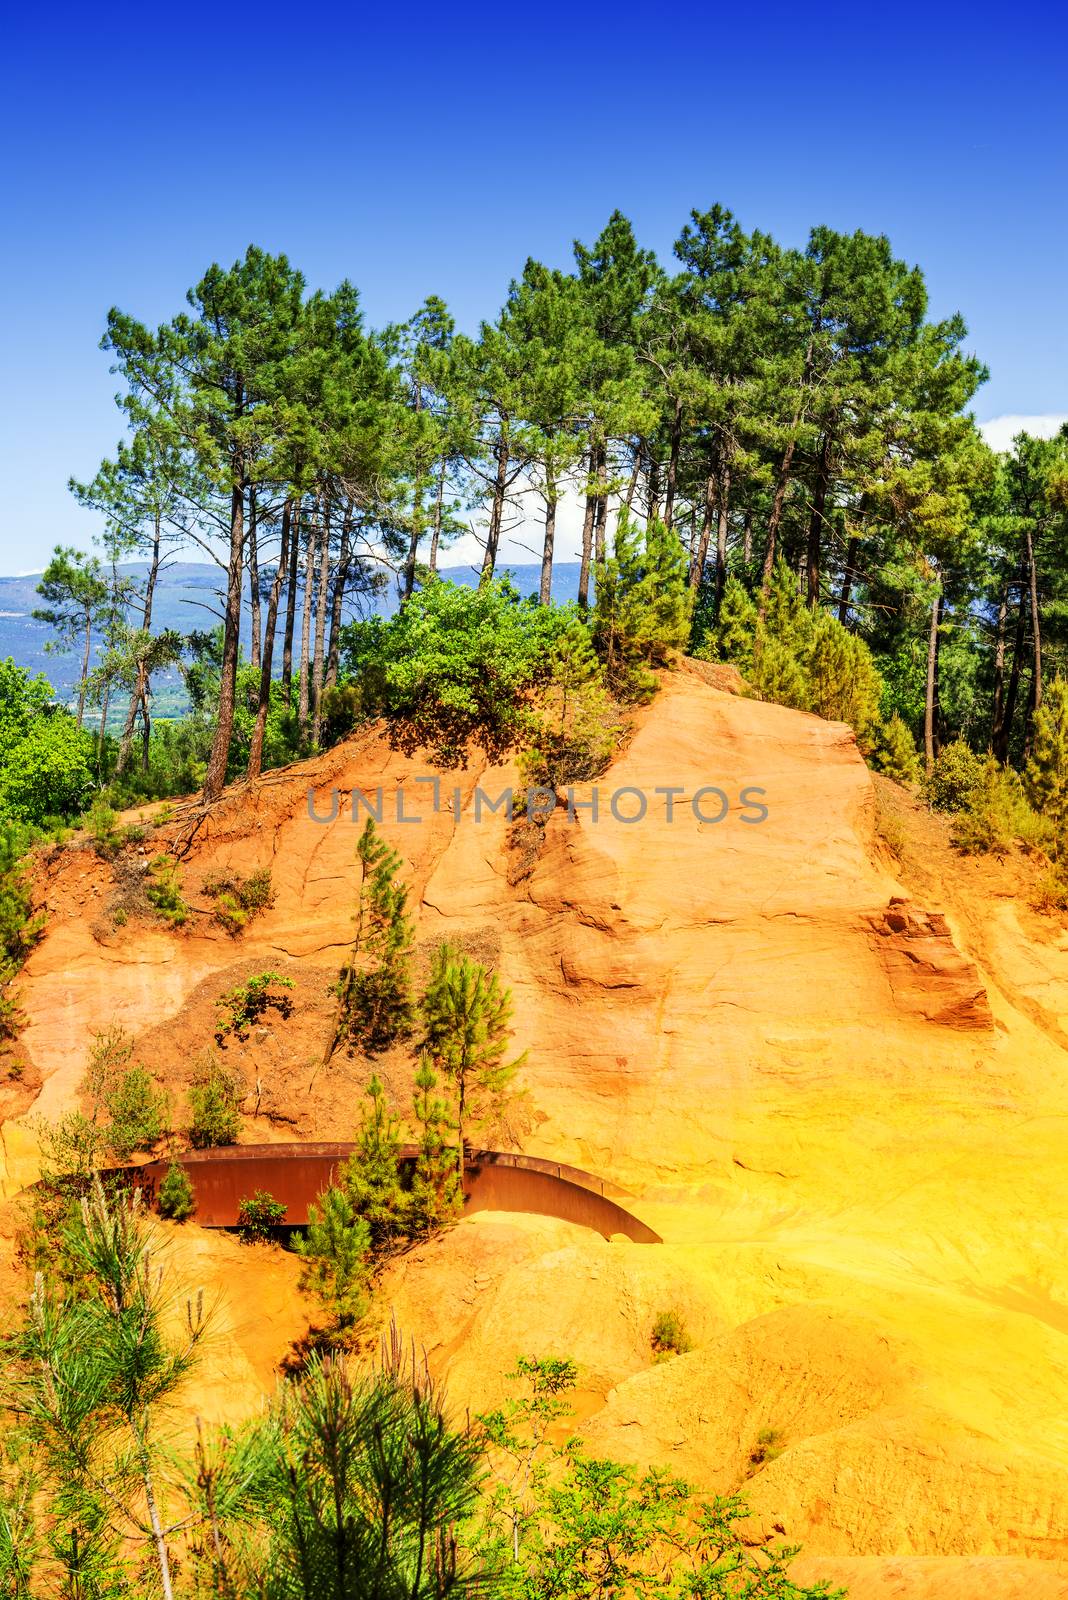 ochre cliffs near Roussillon, Provence, France by ventdusud